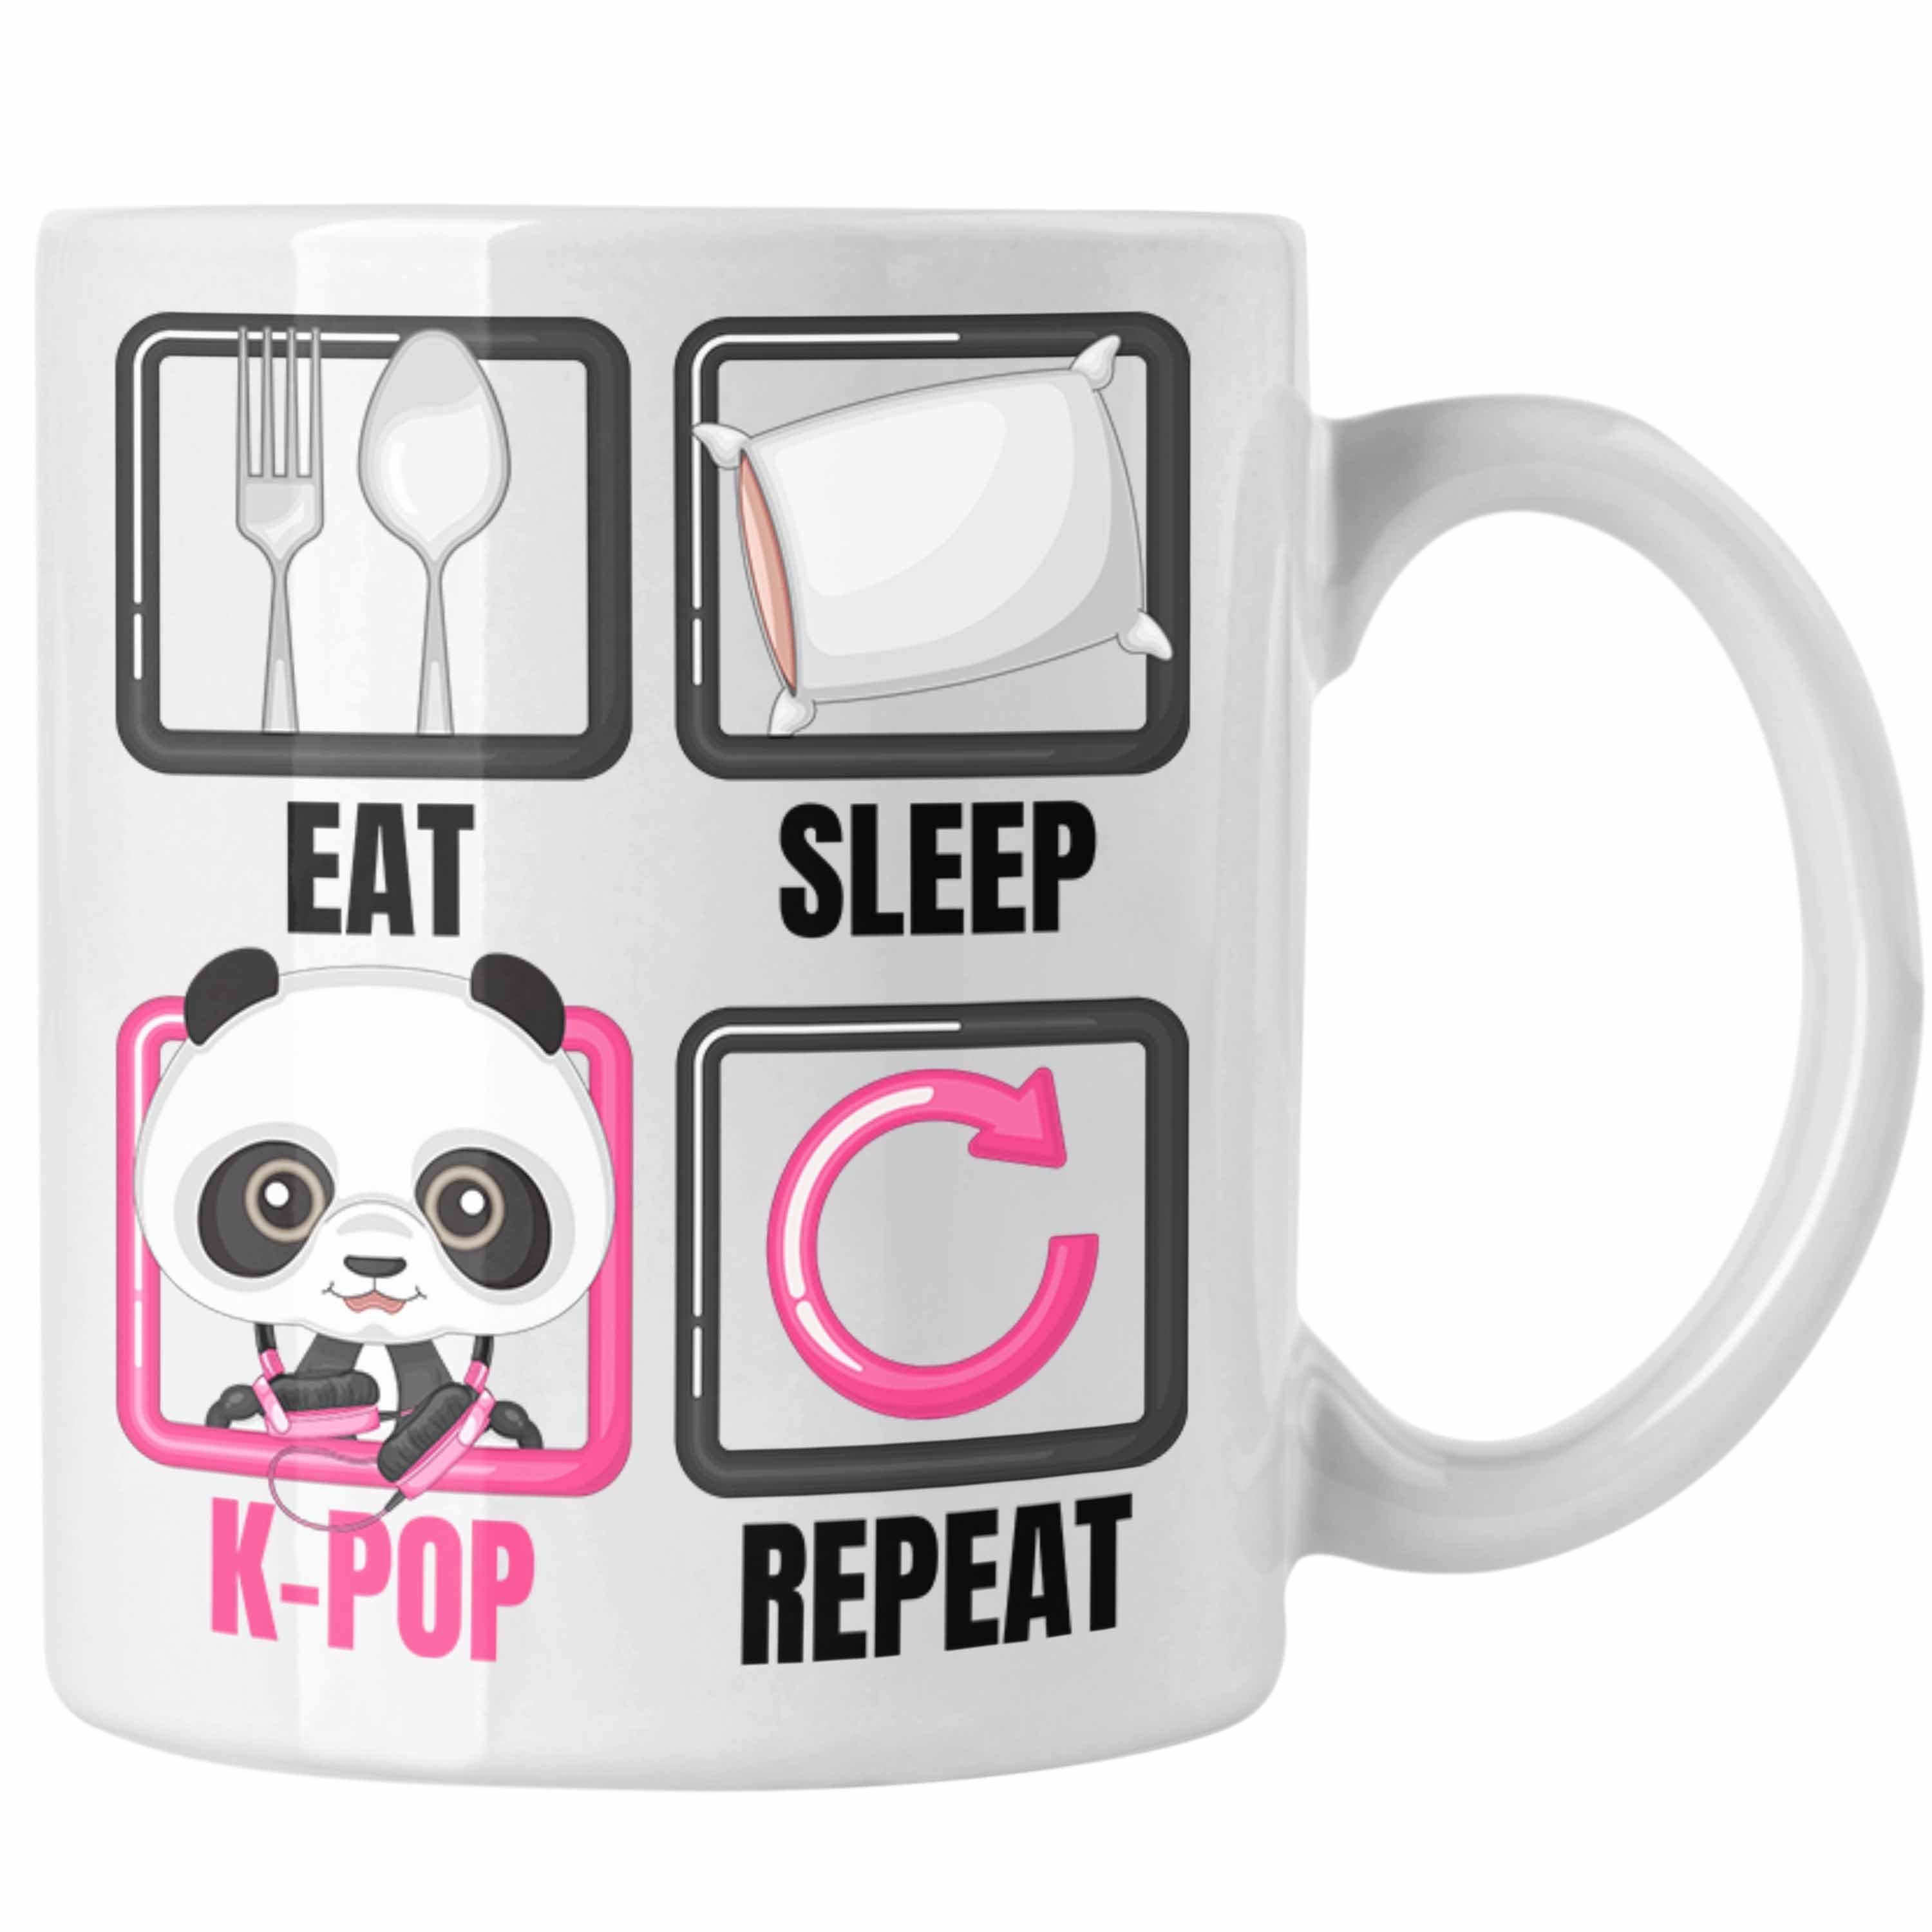 Trendation Tasse Eat Sleep K-Pop Tasse Geschenk Koreanische Musik Kpop Geschenkidee Spr Weiss